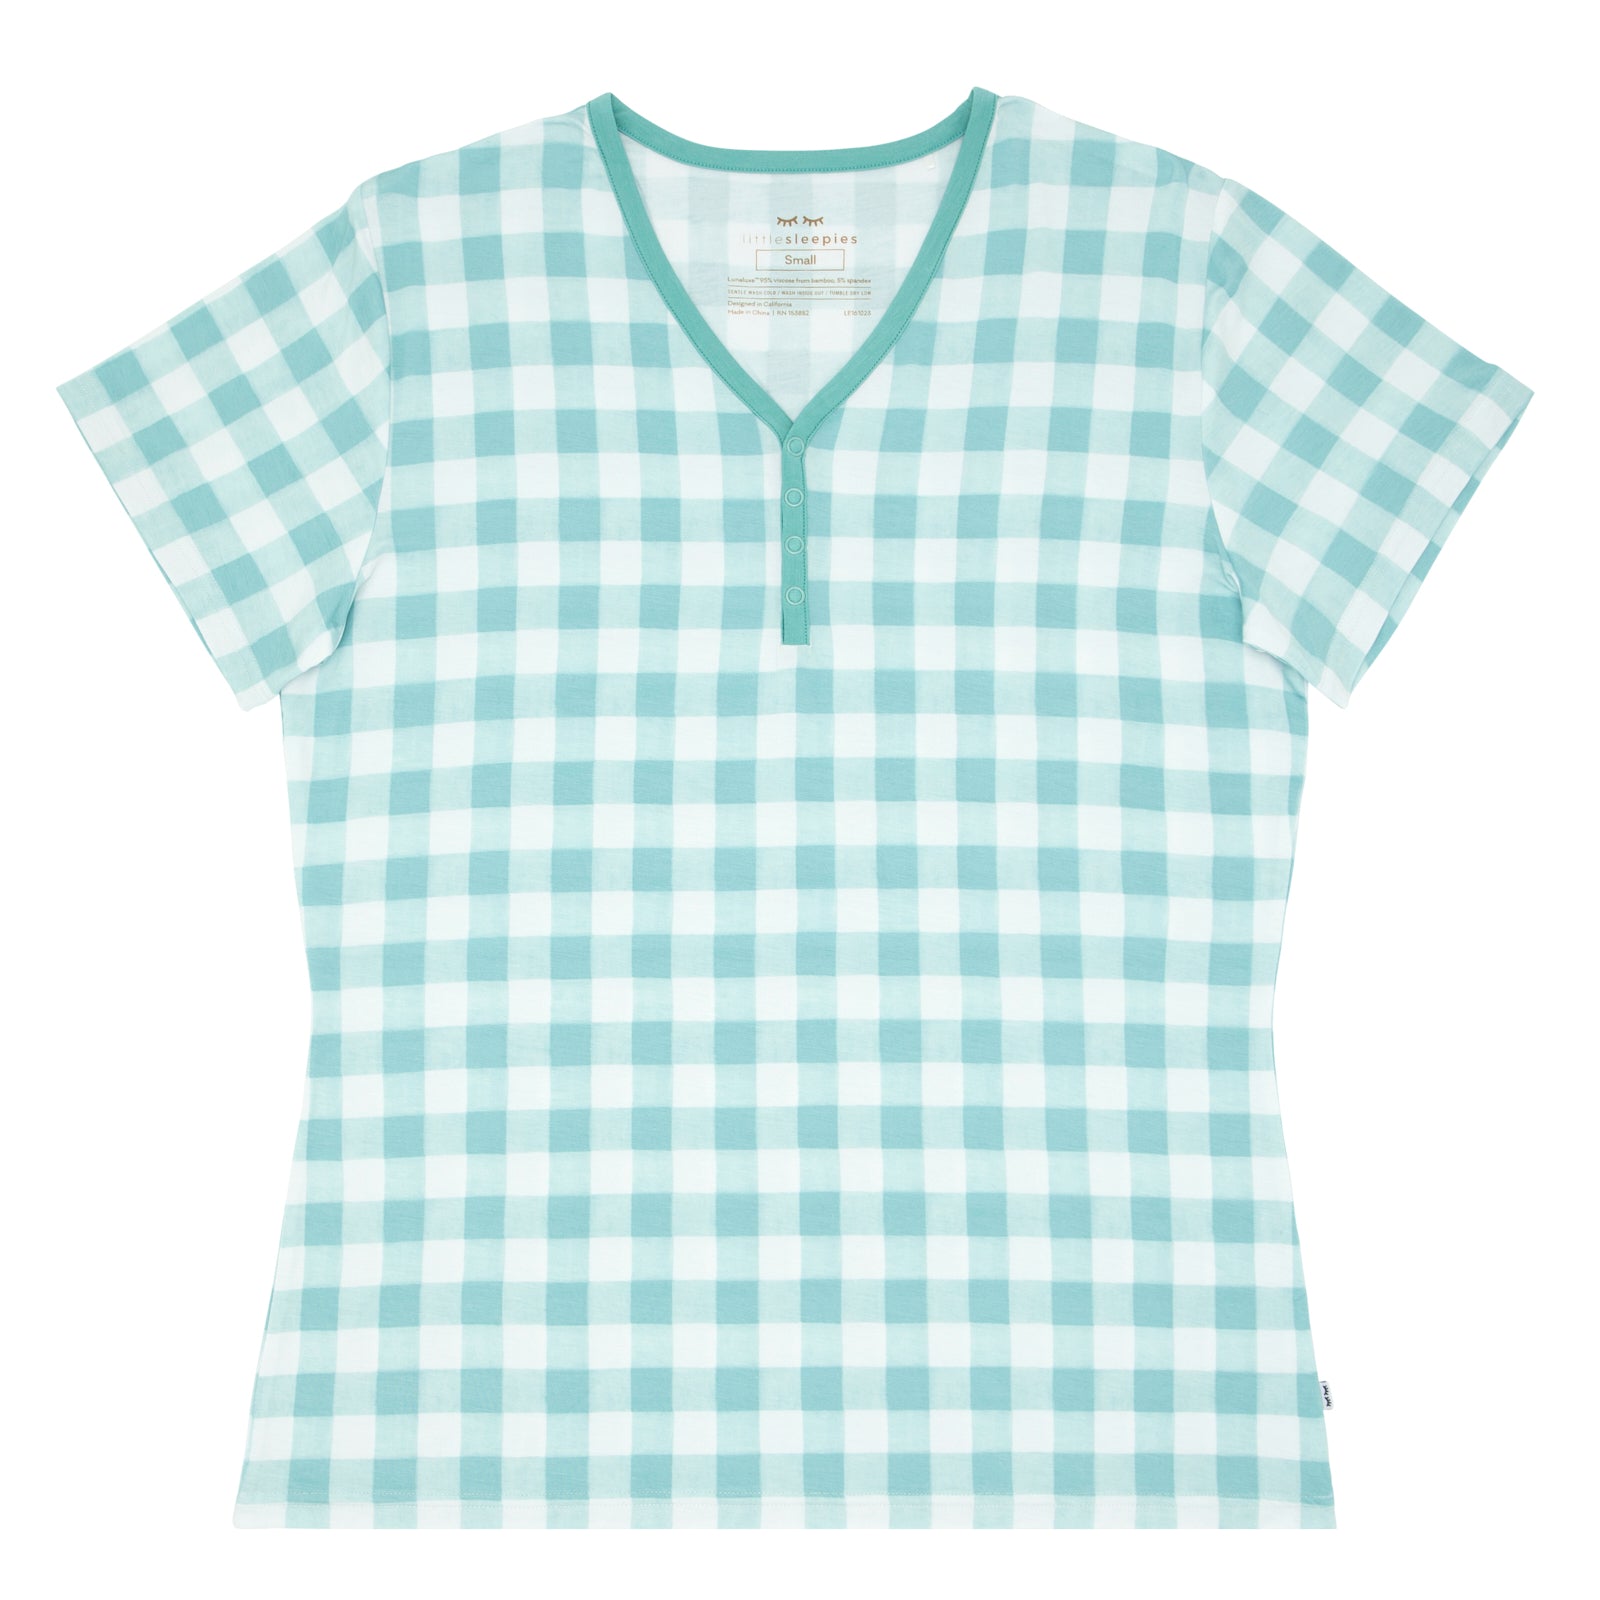 Flat lay image of women's Aqua Gingham short sleeve pajama top